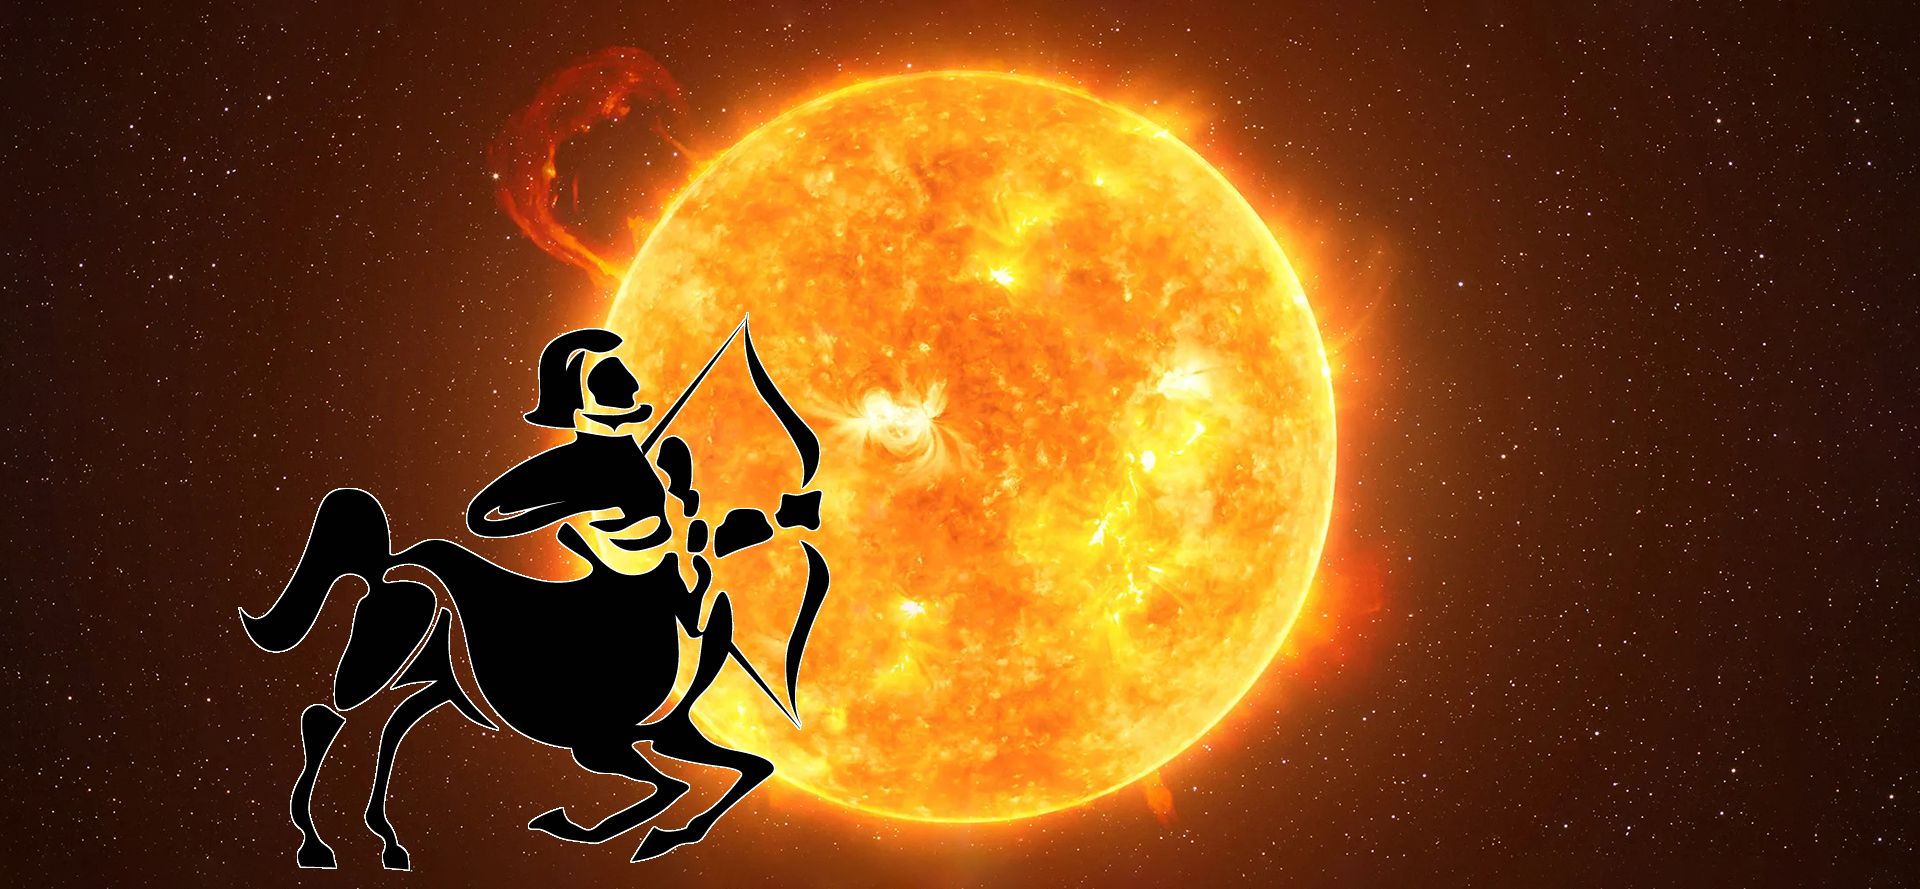 Sagittarius sign and Sun.